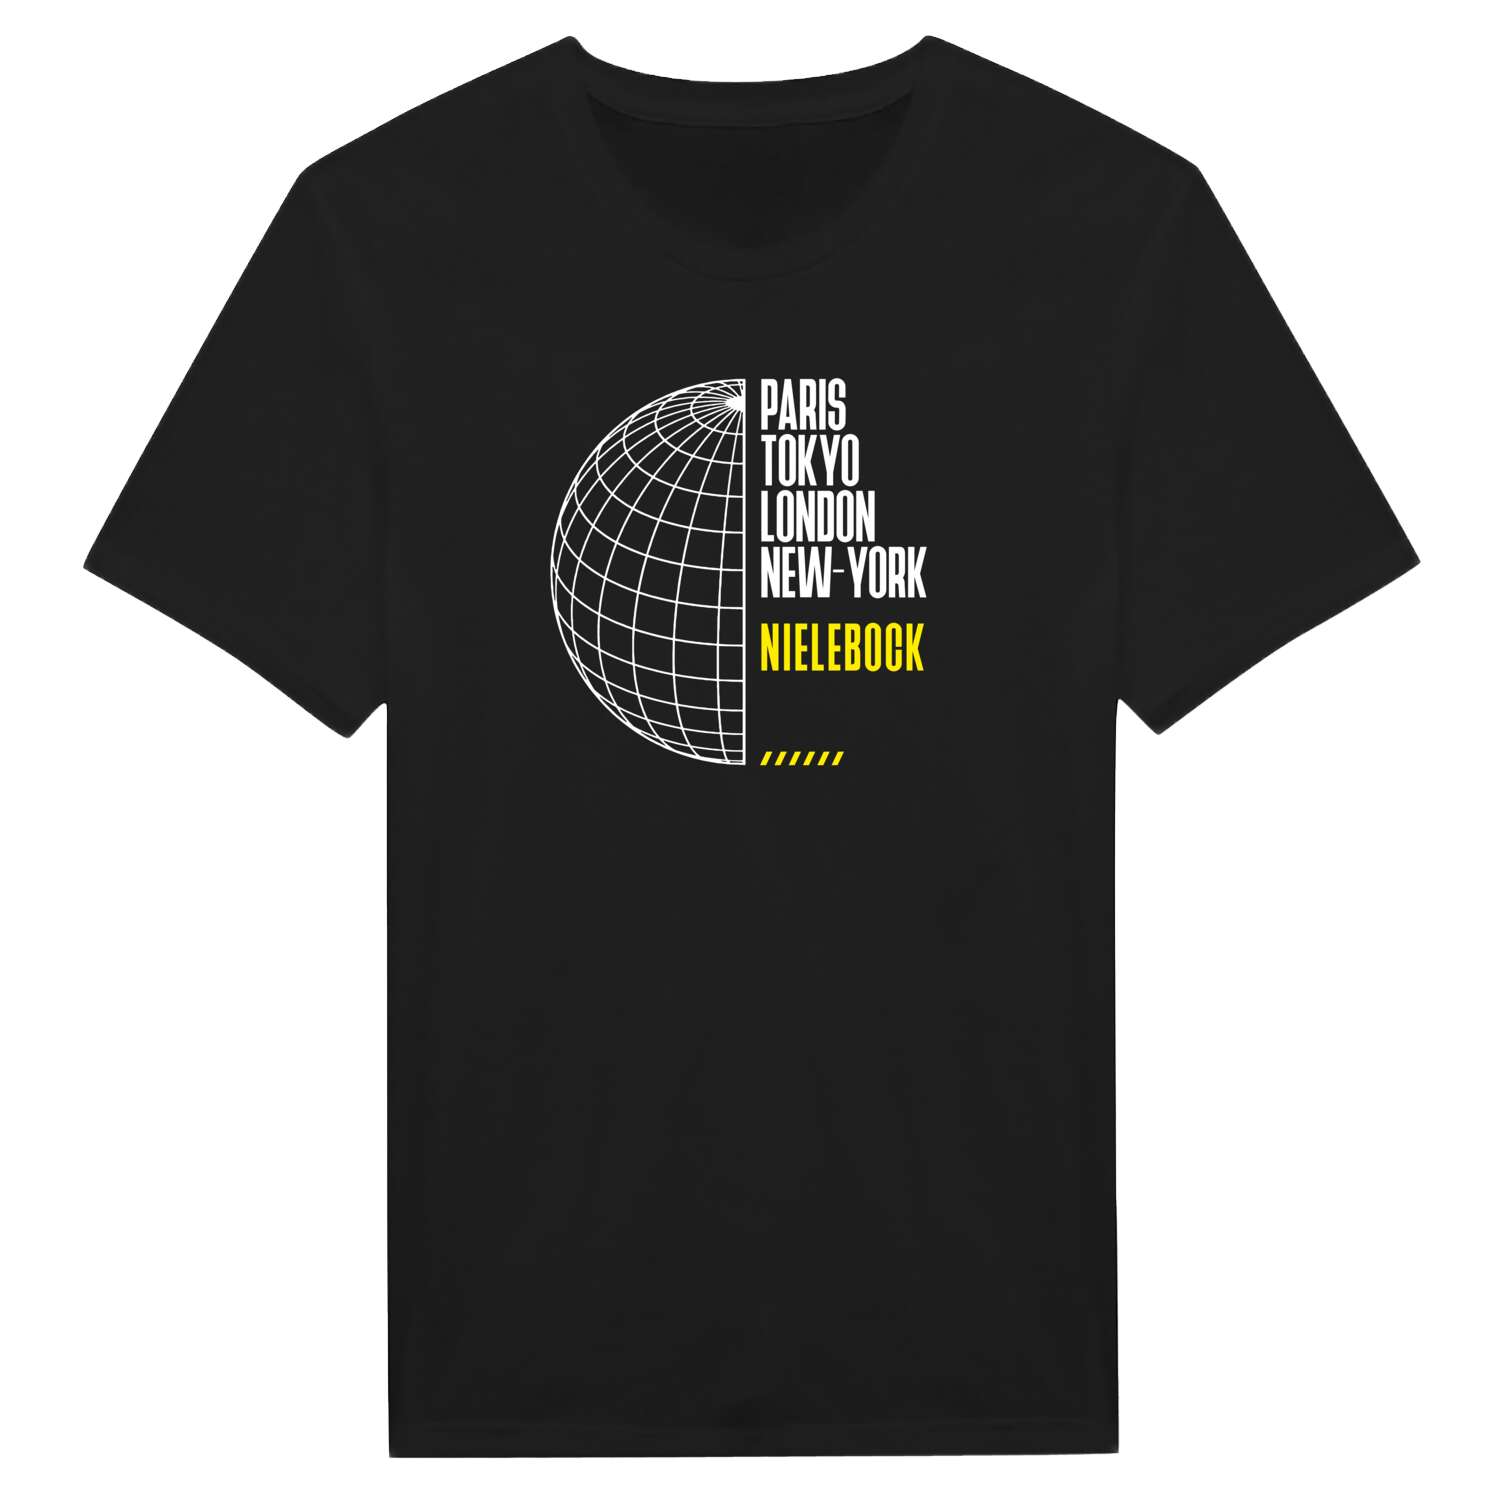 Nielebock T-Shirt »Paris Tokyo London«